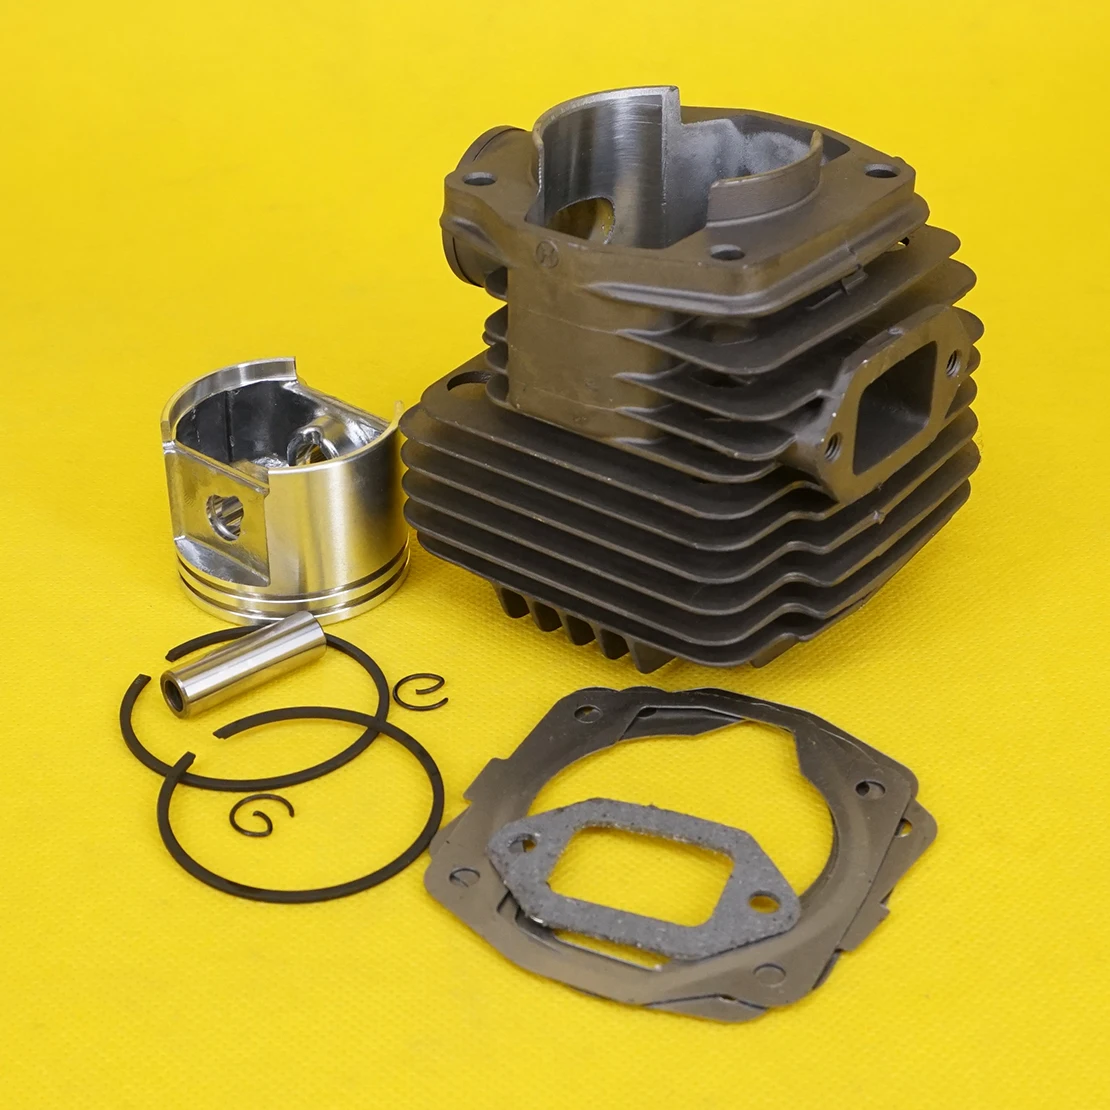 TS400 Cylinder & Piston Pin Kit Bearing Top End Rebuild Kit Fit For STIHL TS 400 